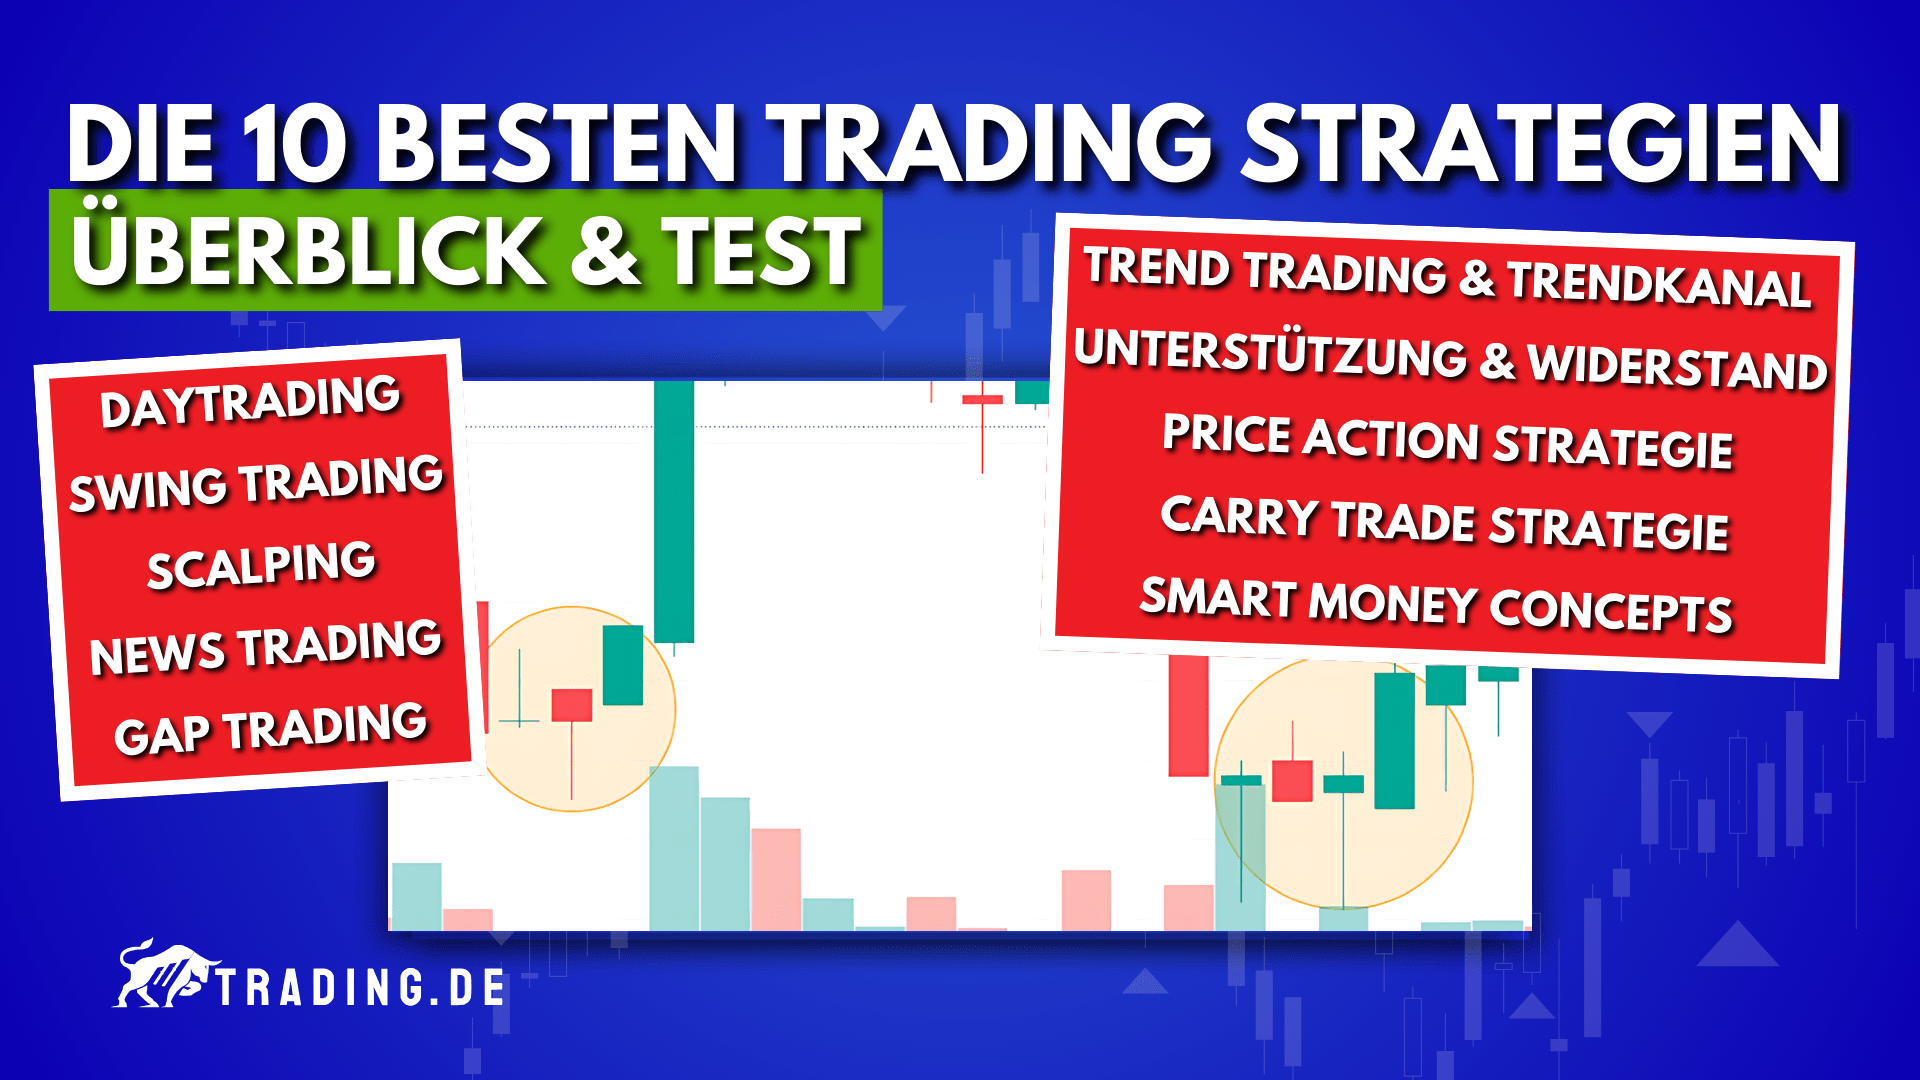 Die 10 besten Trading Strategien